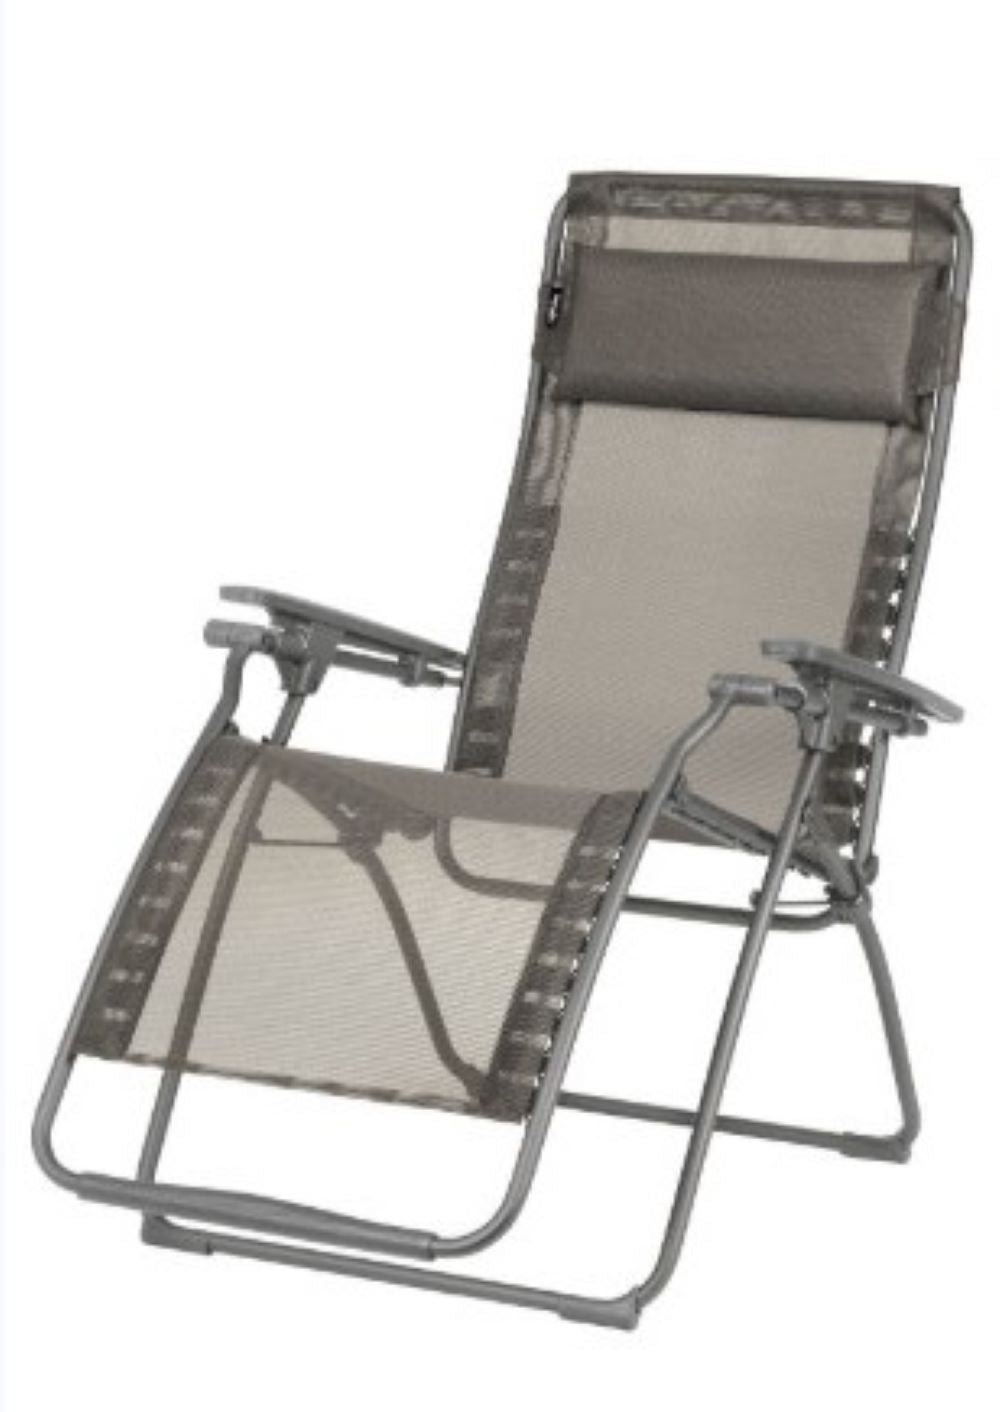 28" Graphite and Gray Metal Zero Gravity Chair